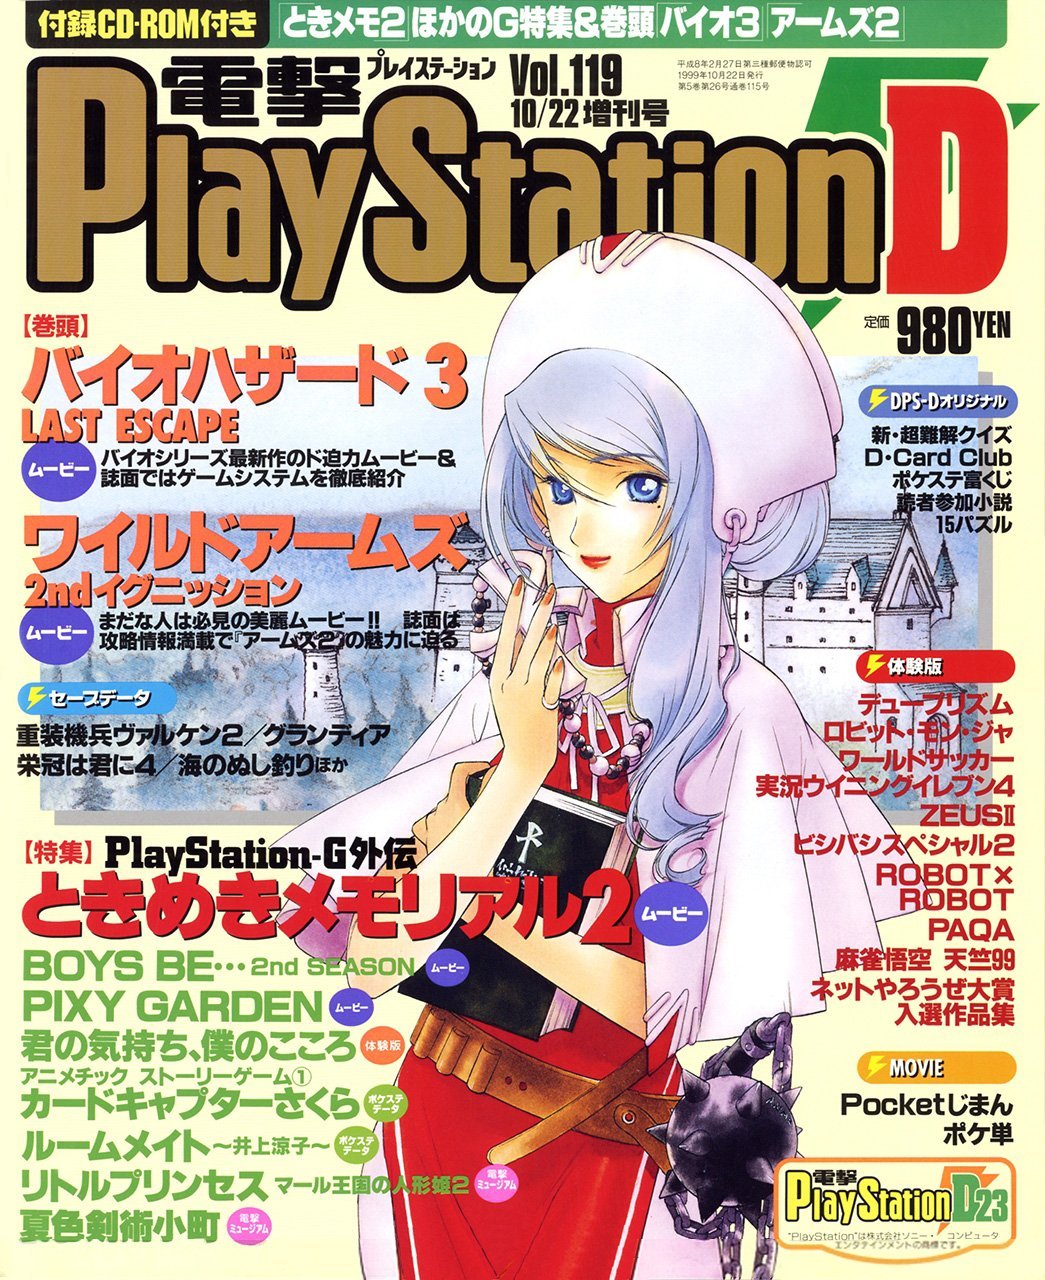 Dengeki Playstation Video Game Magazines Page 5 Retromags Community